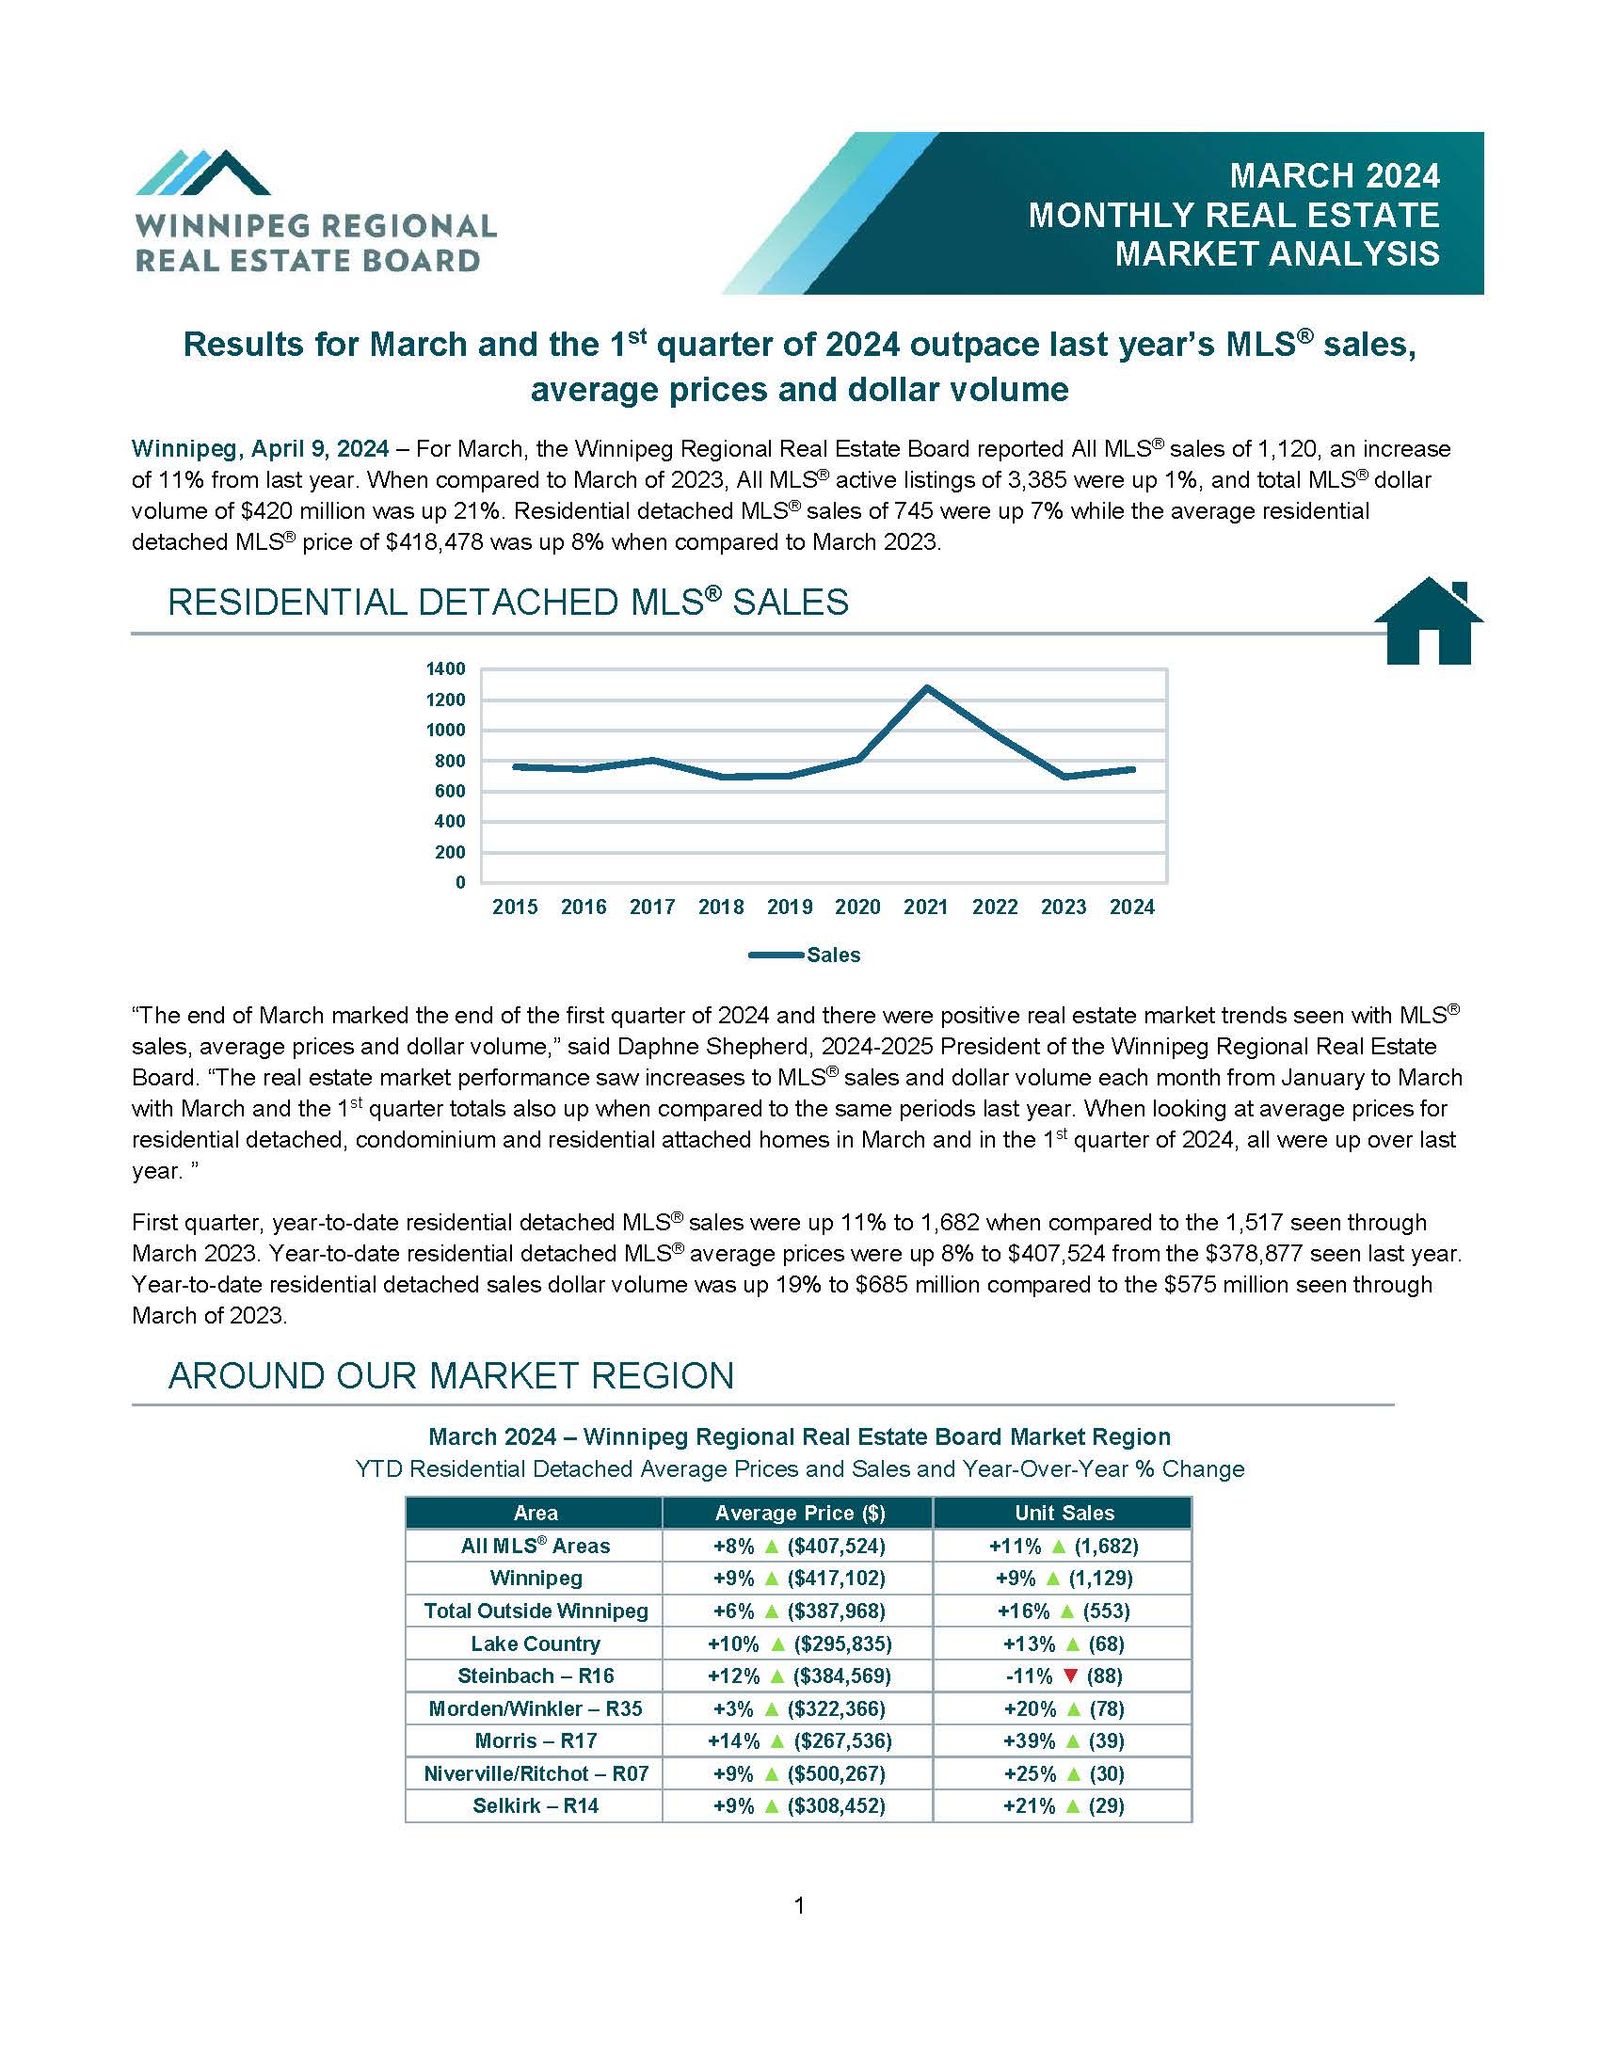 March 2024 Winnipeg Real Estate Market Stats